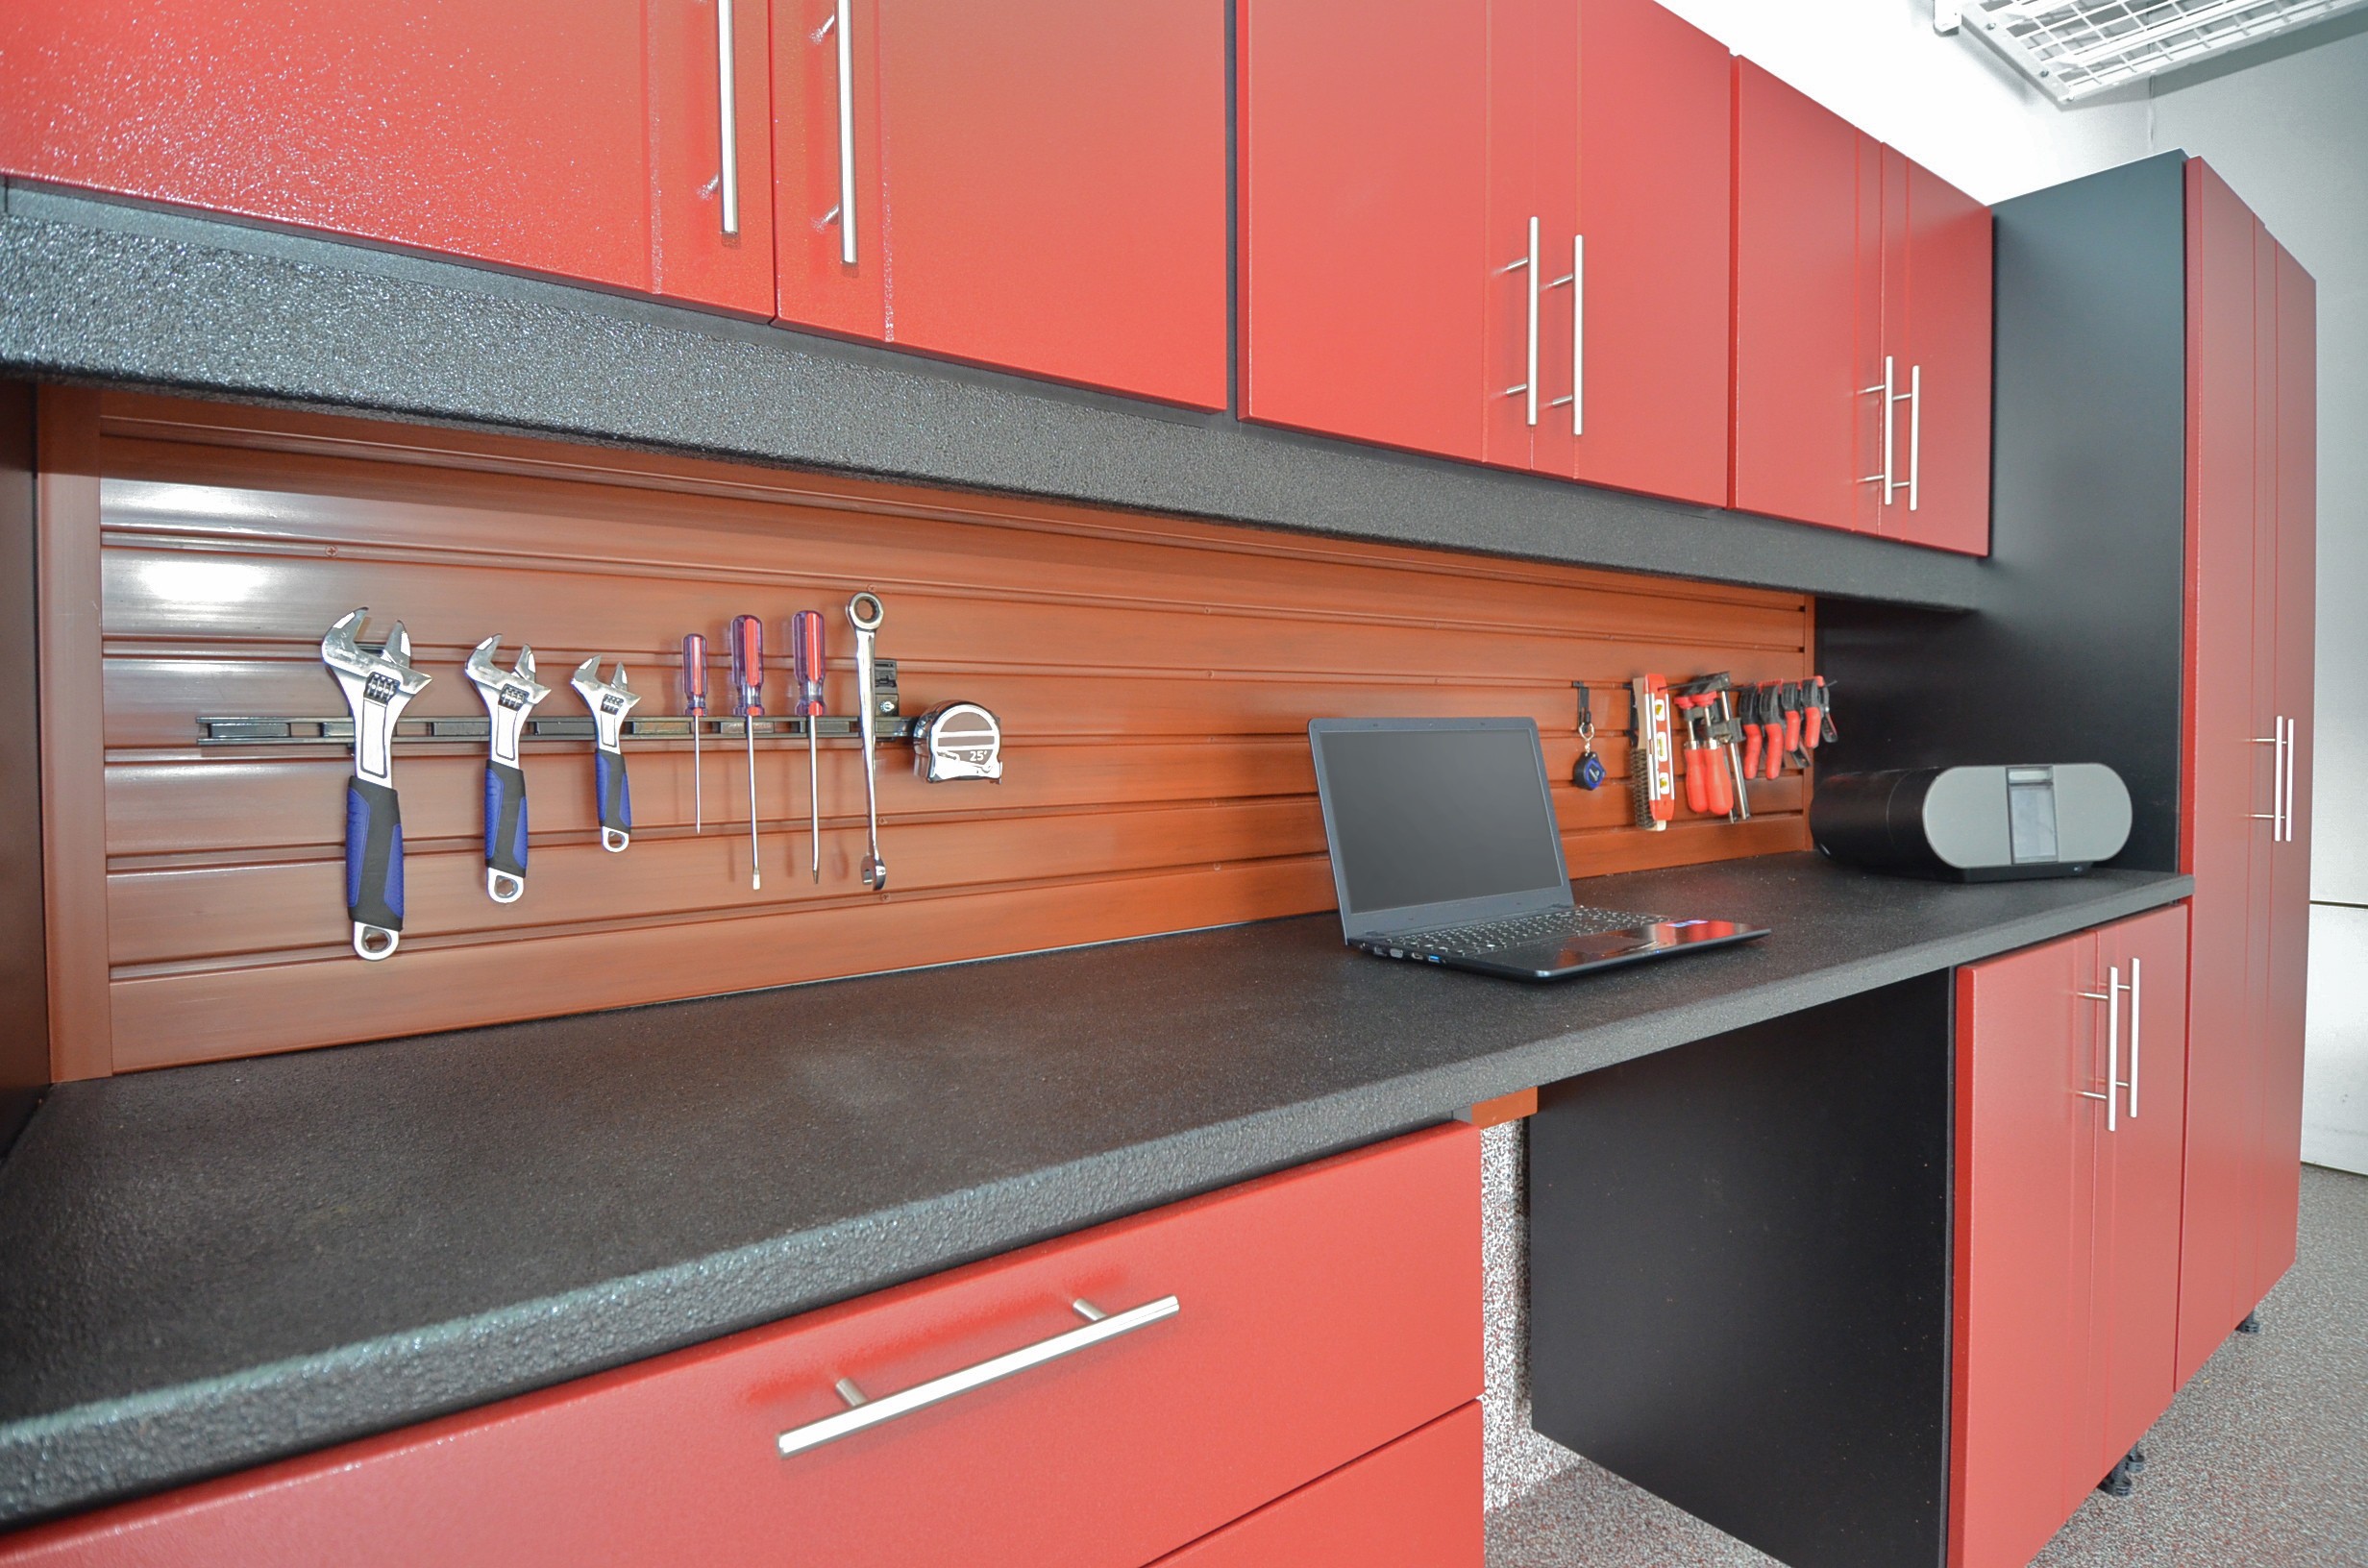 SlatWall Panels & SlatWall Accessories Above A WorkSpace Garage Cabinets Workbench Area